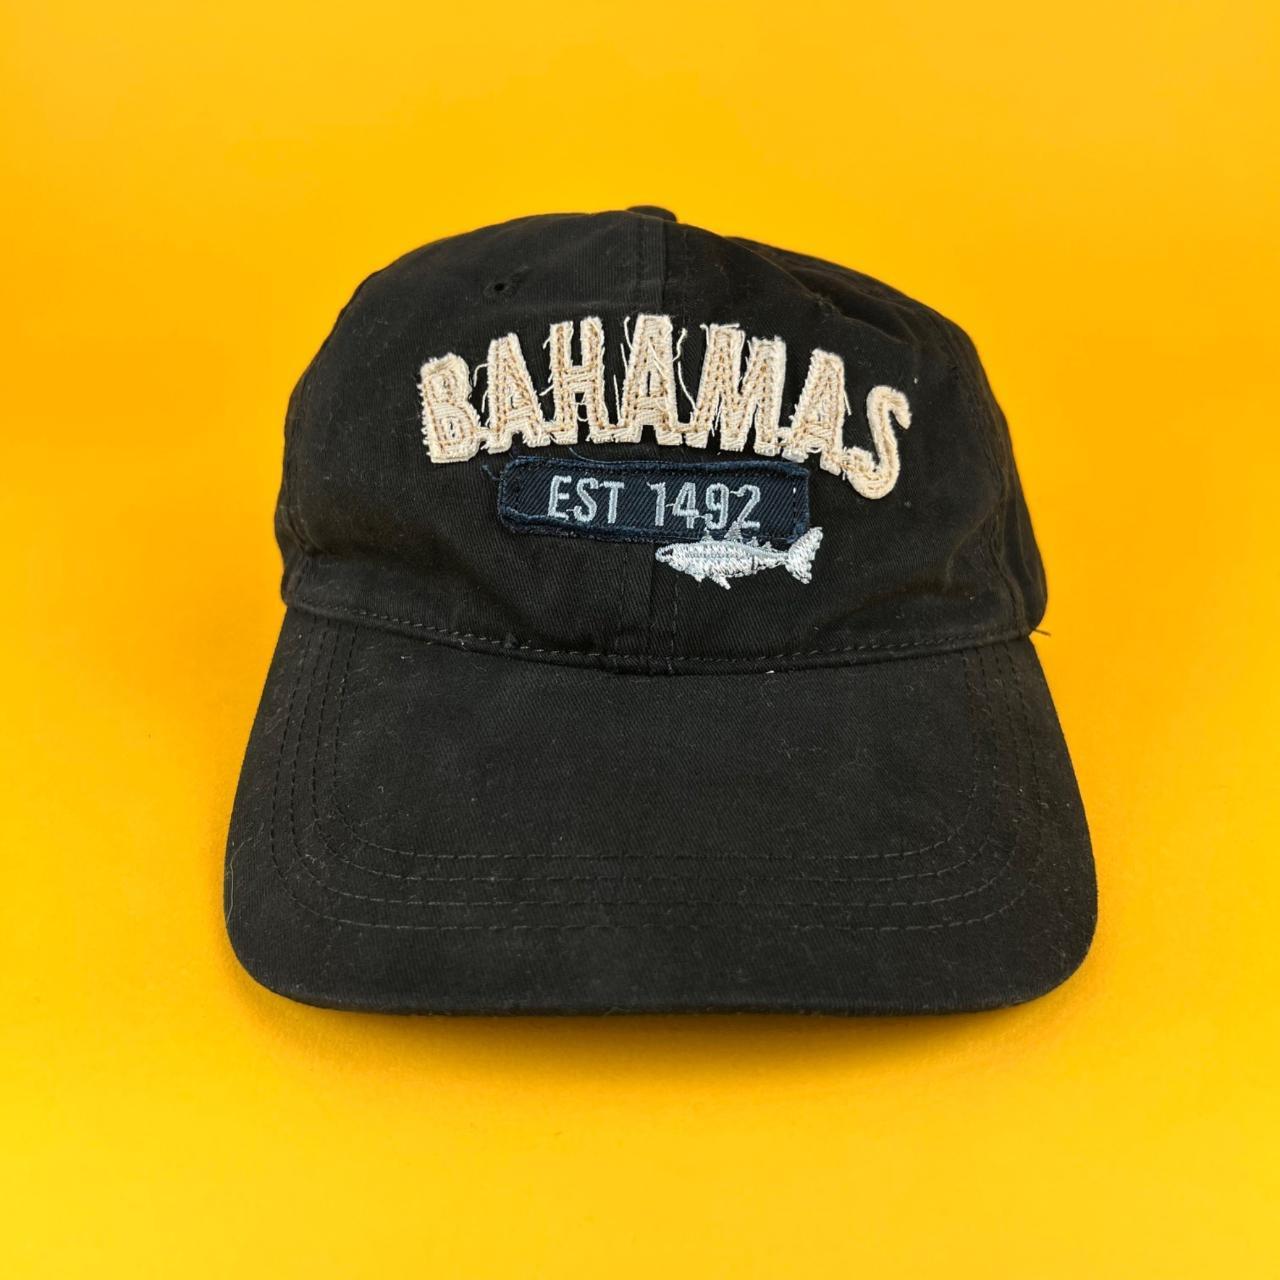 Product Image 1 - Bahamas Est 1492 Embroidered Black